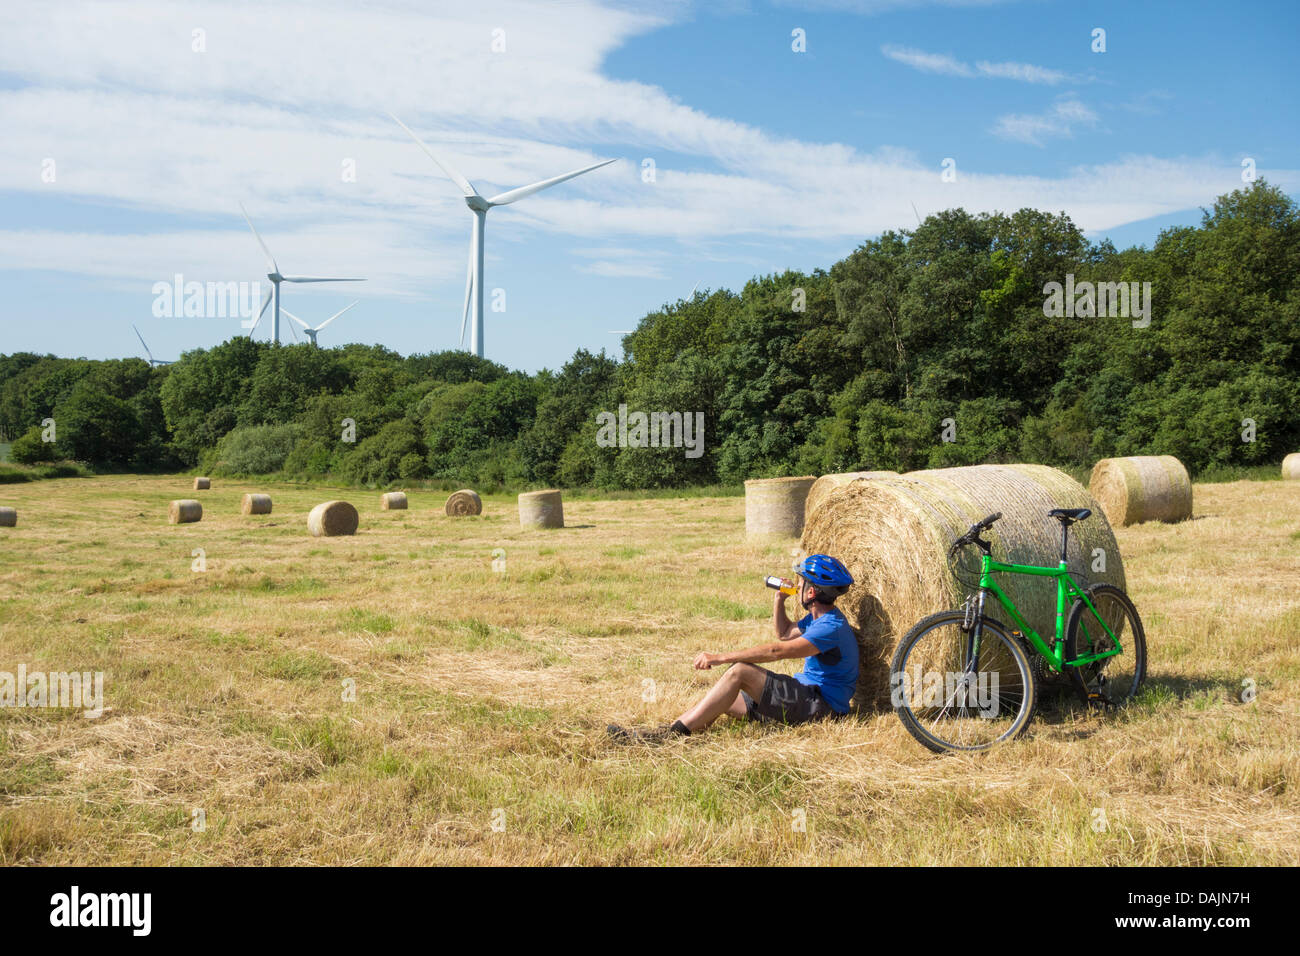 Mountain biker in hay field with wind turbines in background. UK Stock Photo